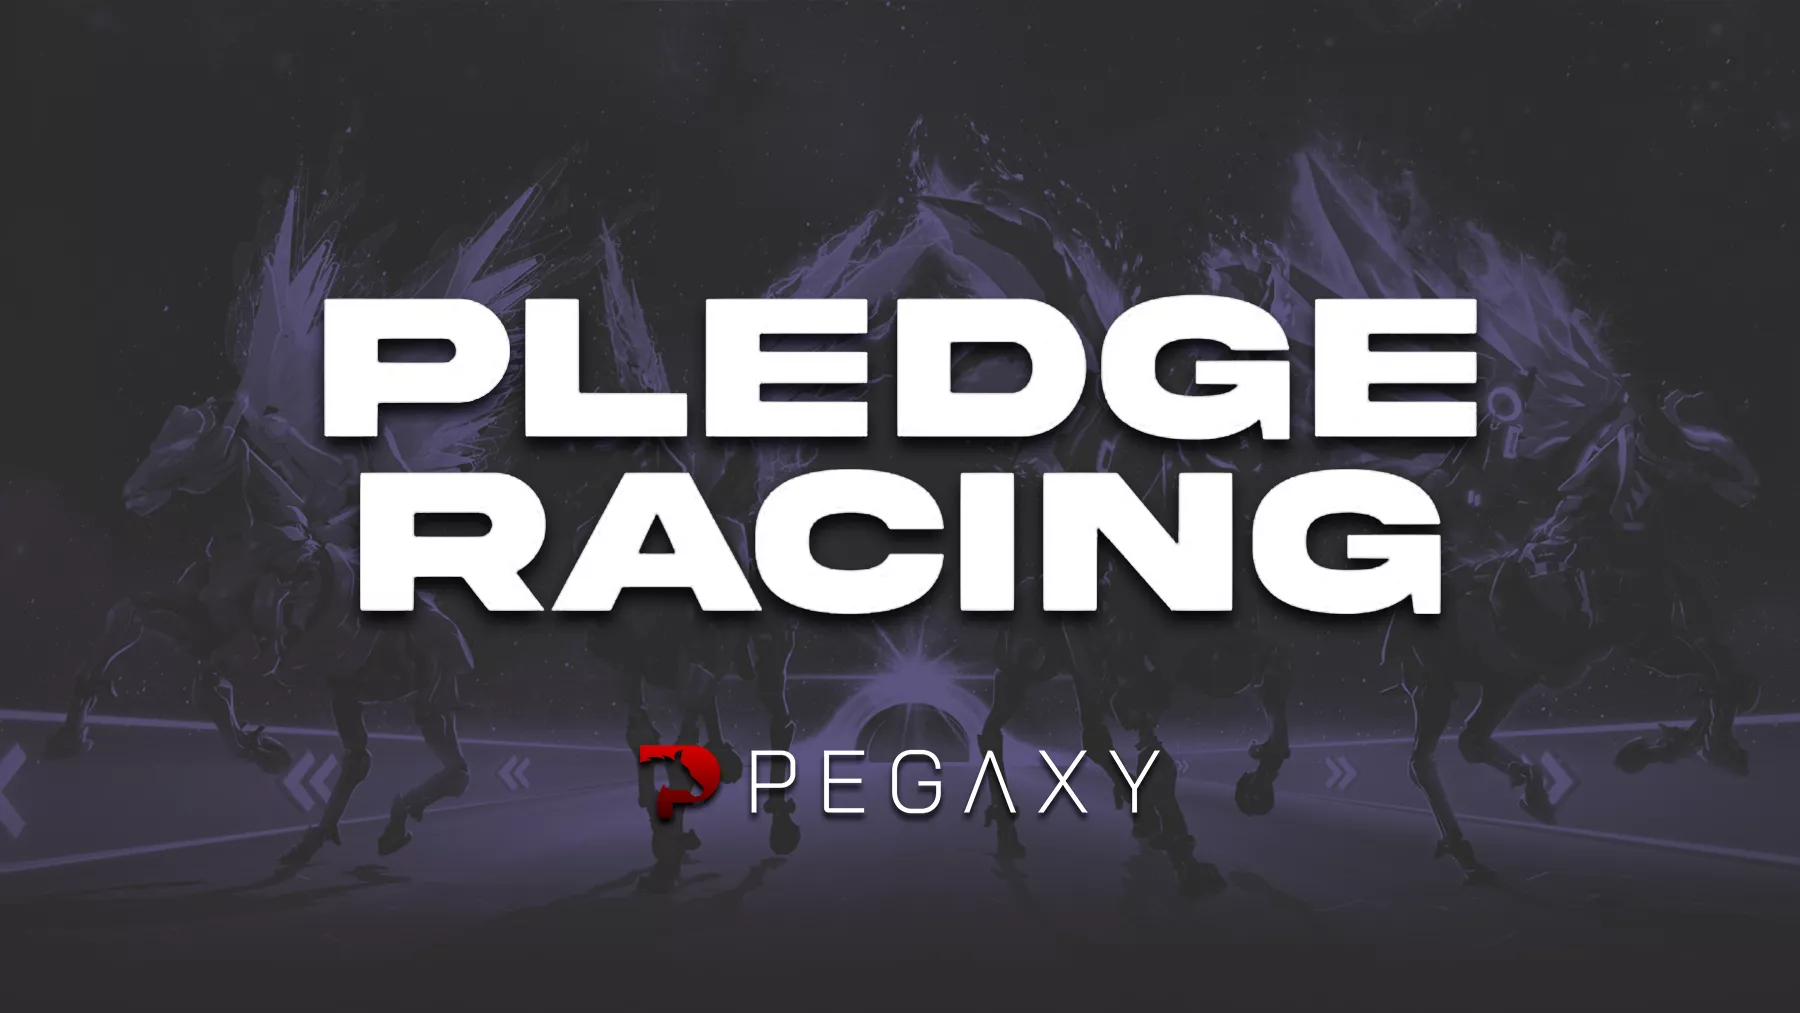 Pegaxy’s Pledge Racing